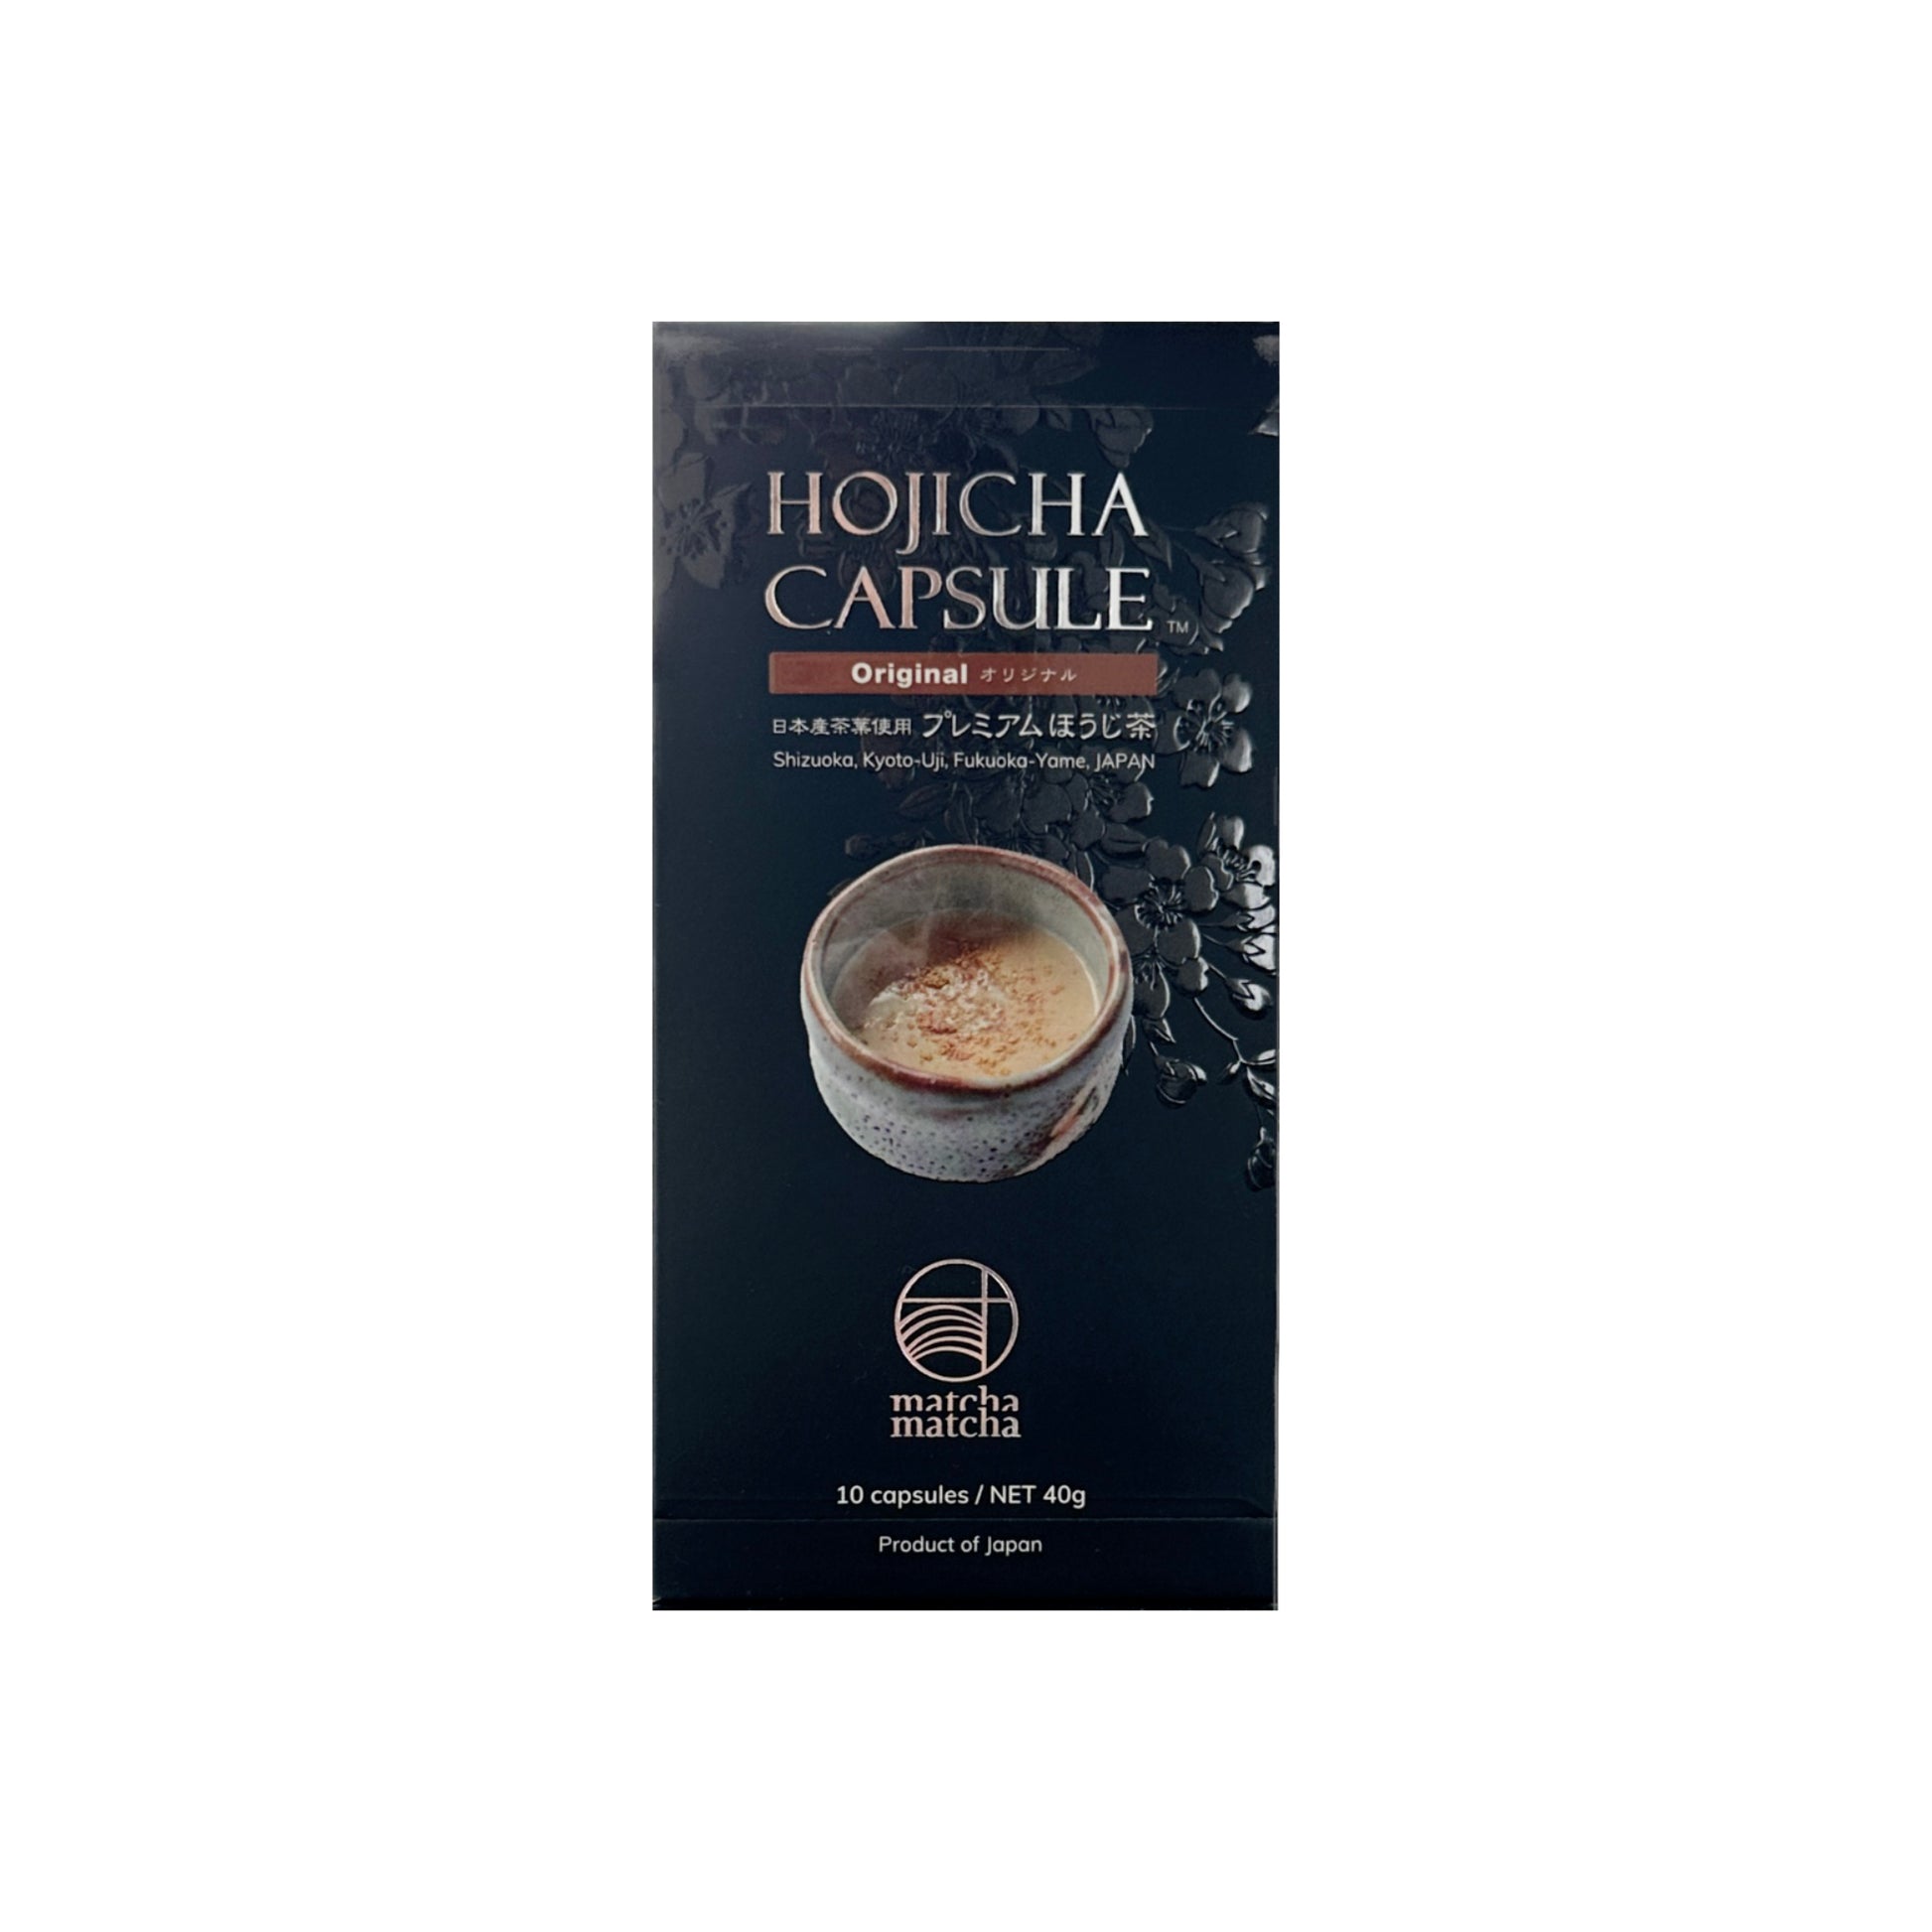 World's first Japanese Nespresso Compatible Hojicha Capsule